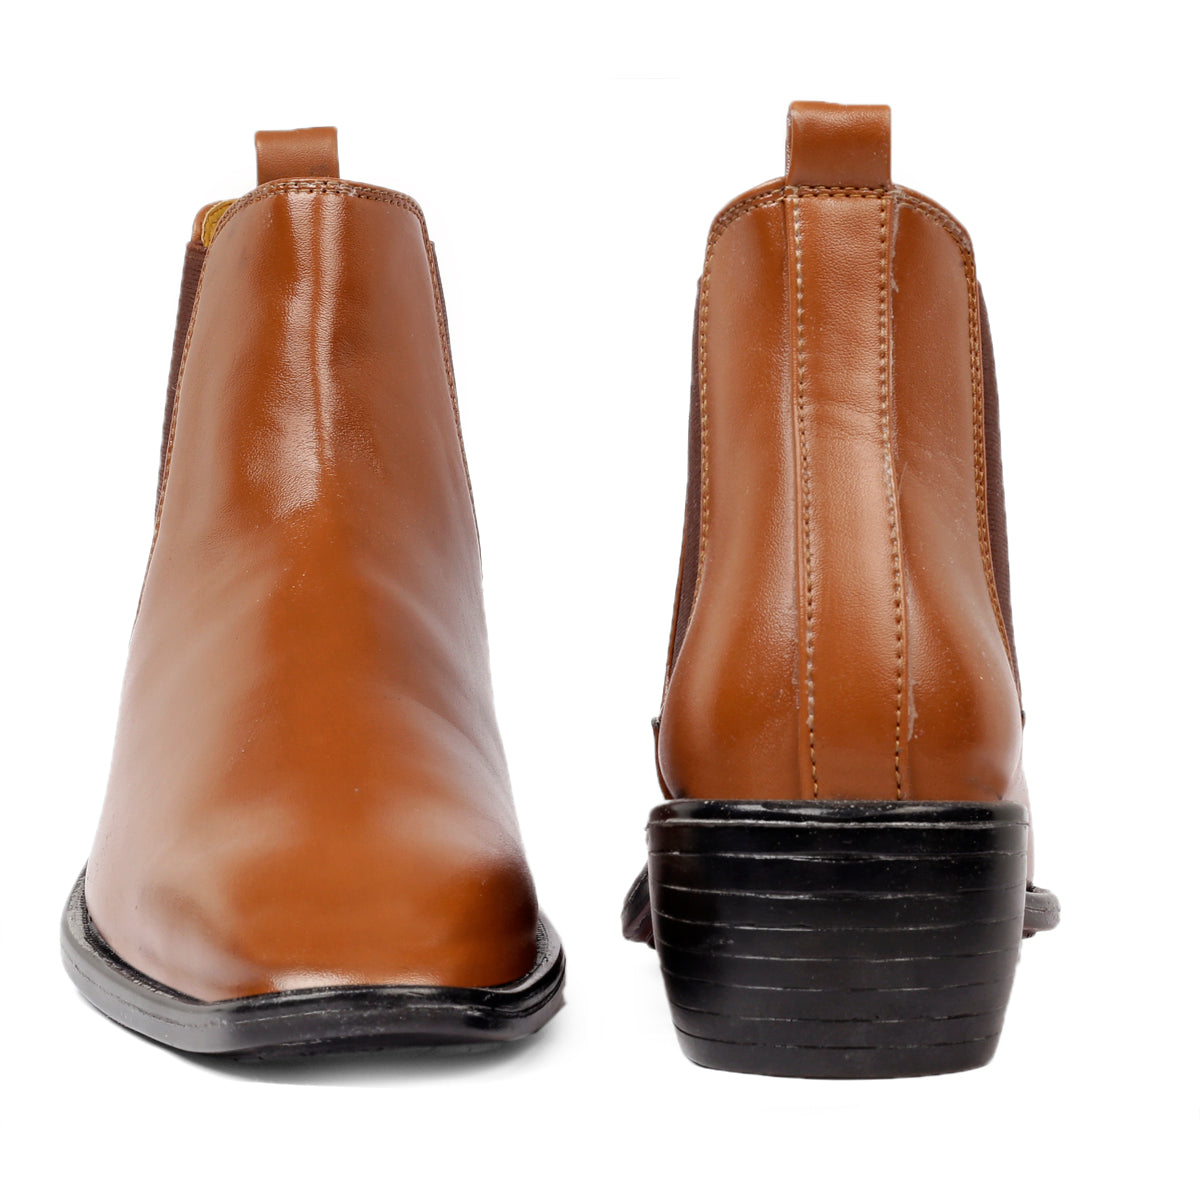 Men's High-end Fashionable Chelsea Boots